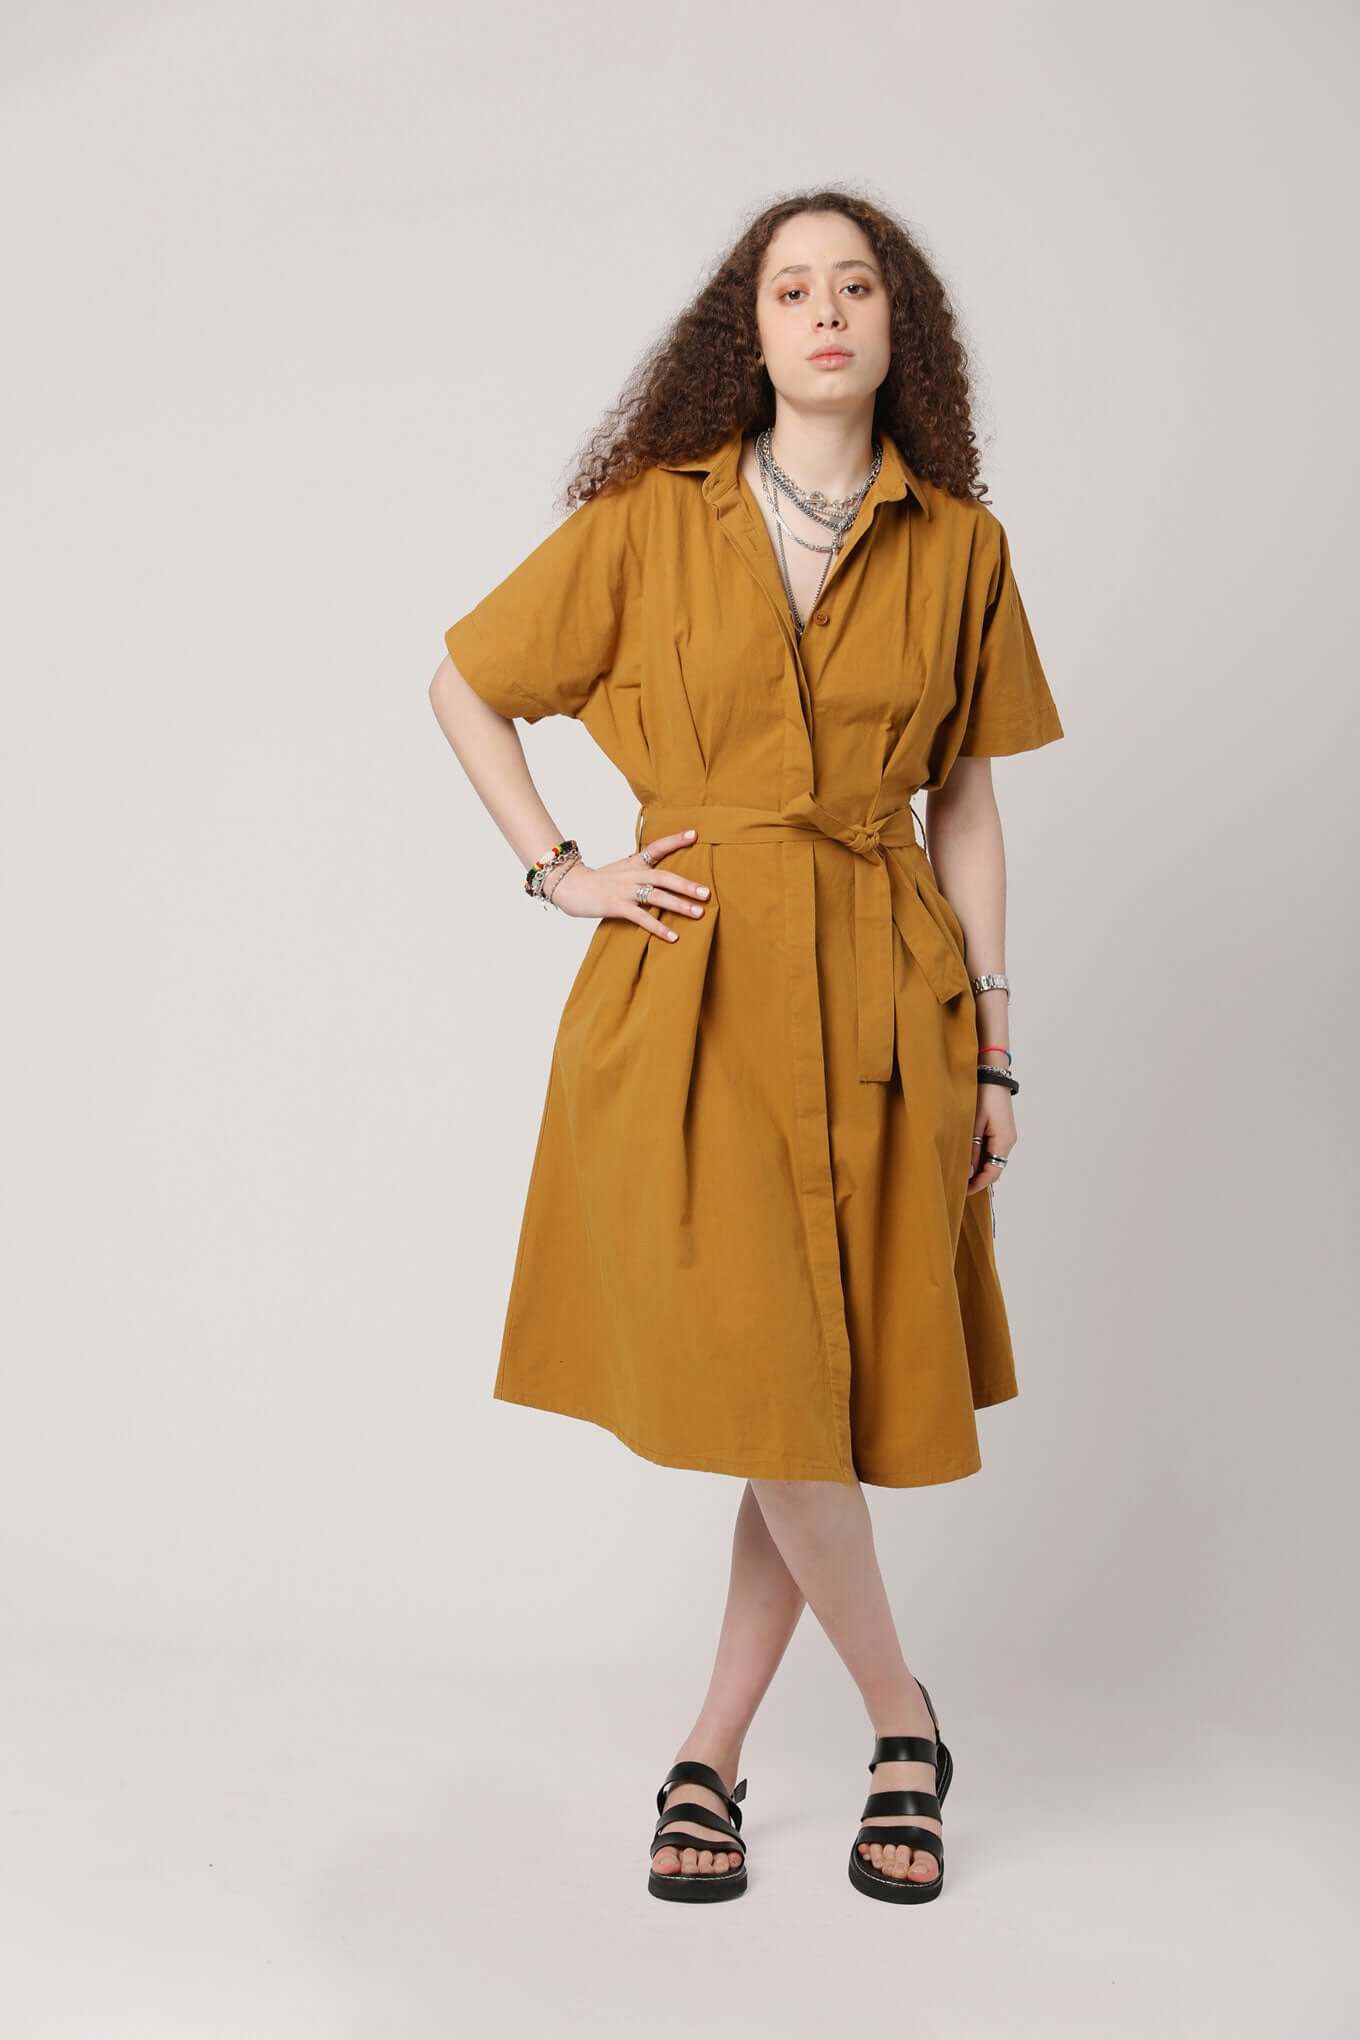 ASHES Organic Cotton Dress Bronze-Brown, SIZE 1 / UK 8 / EUR 36